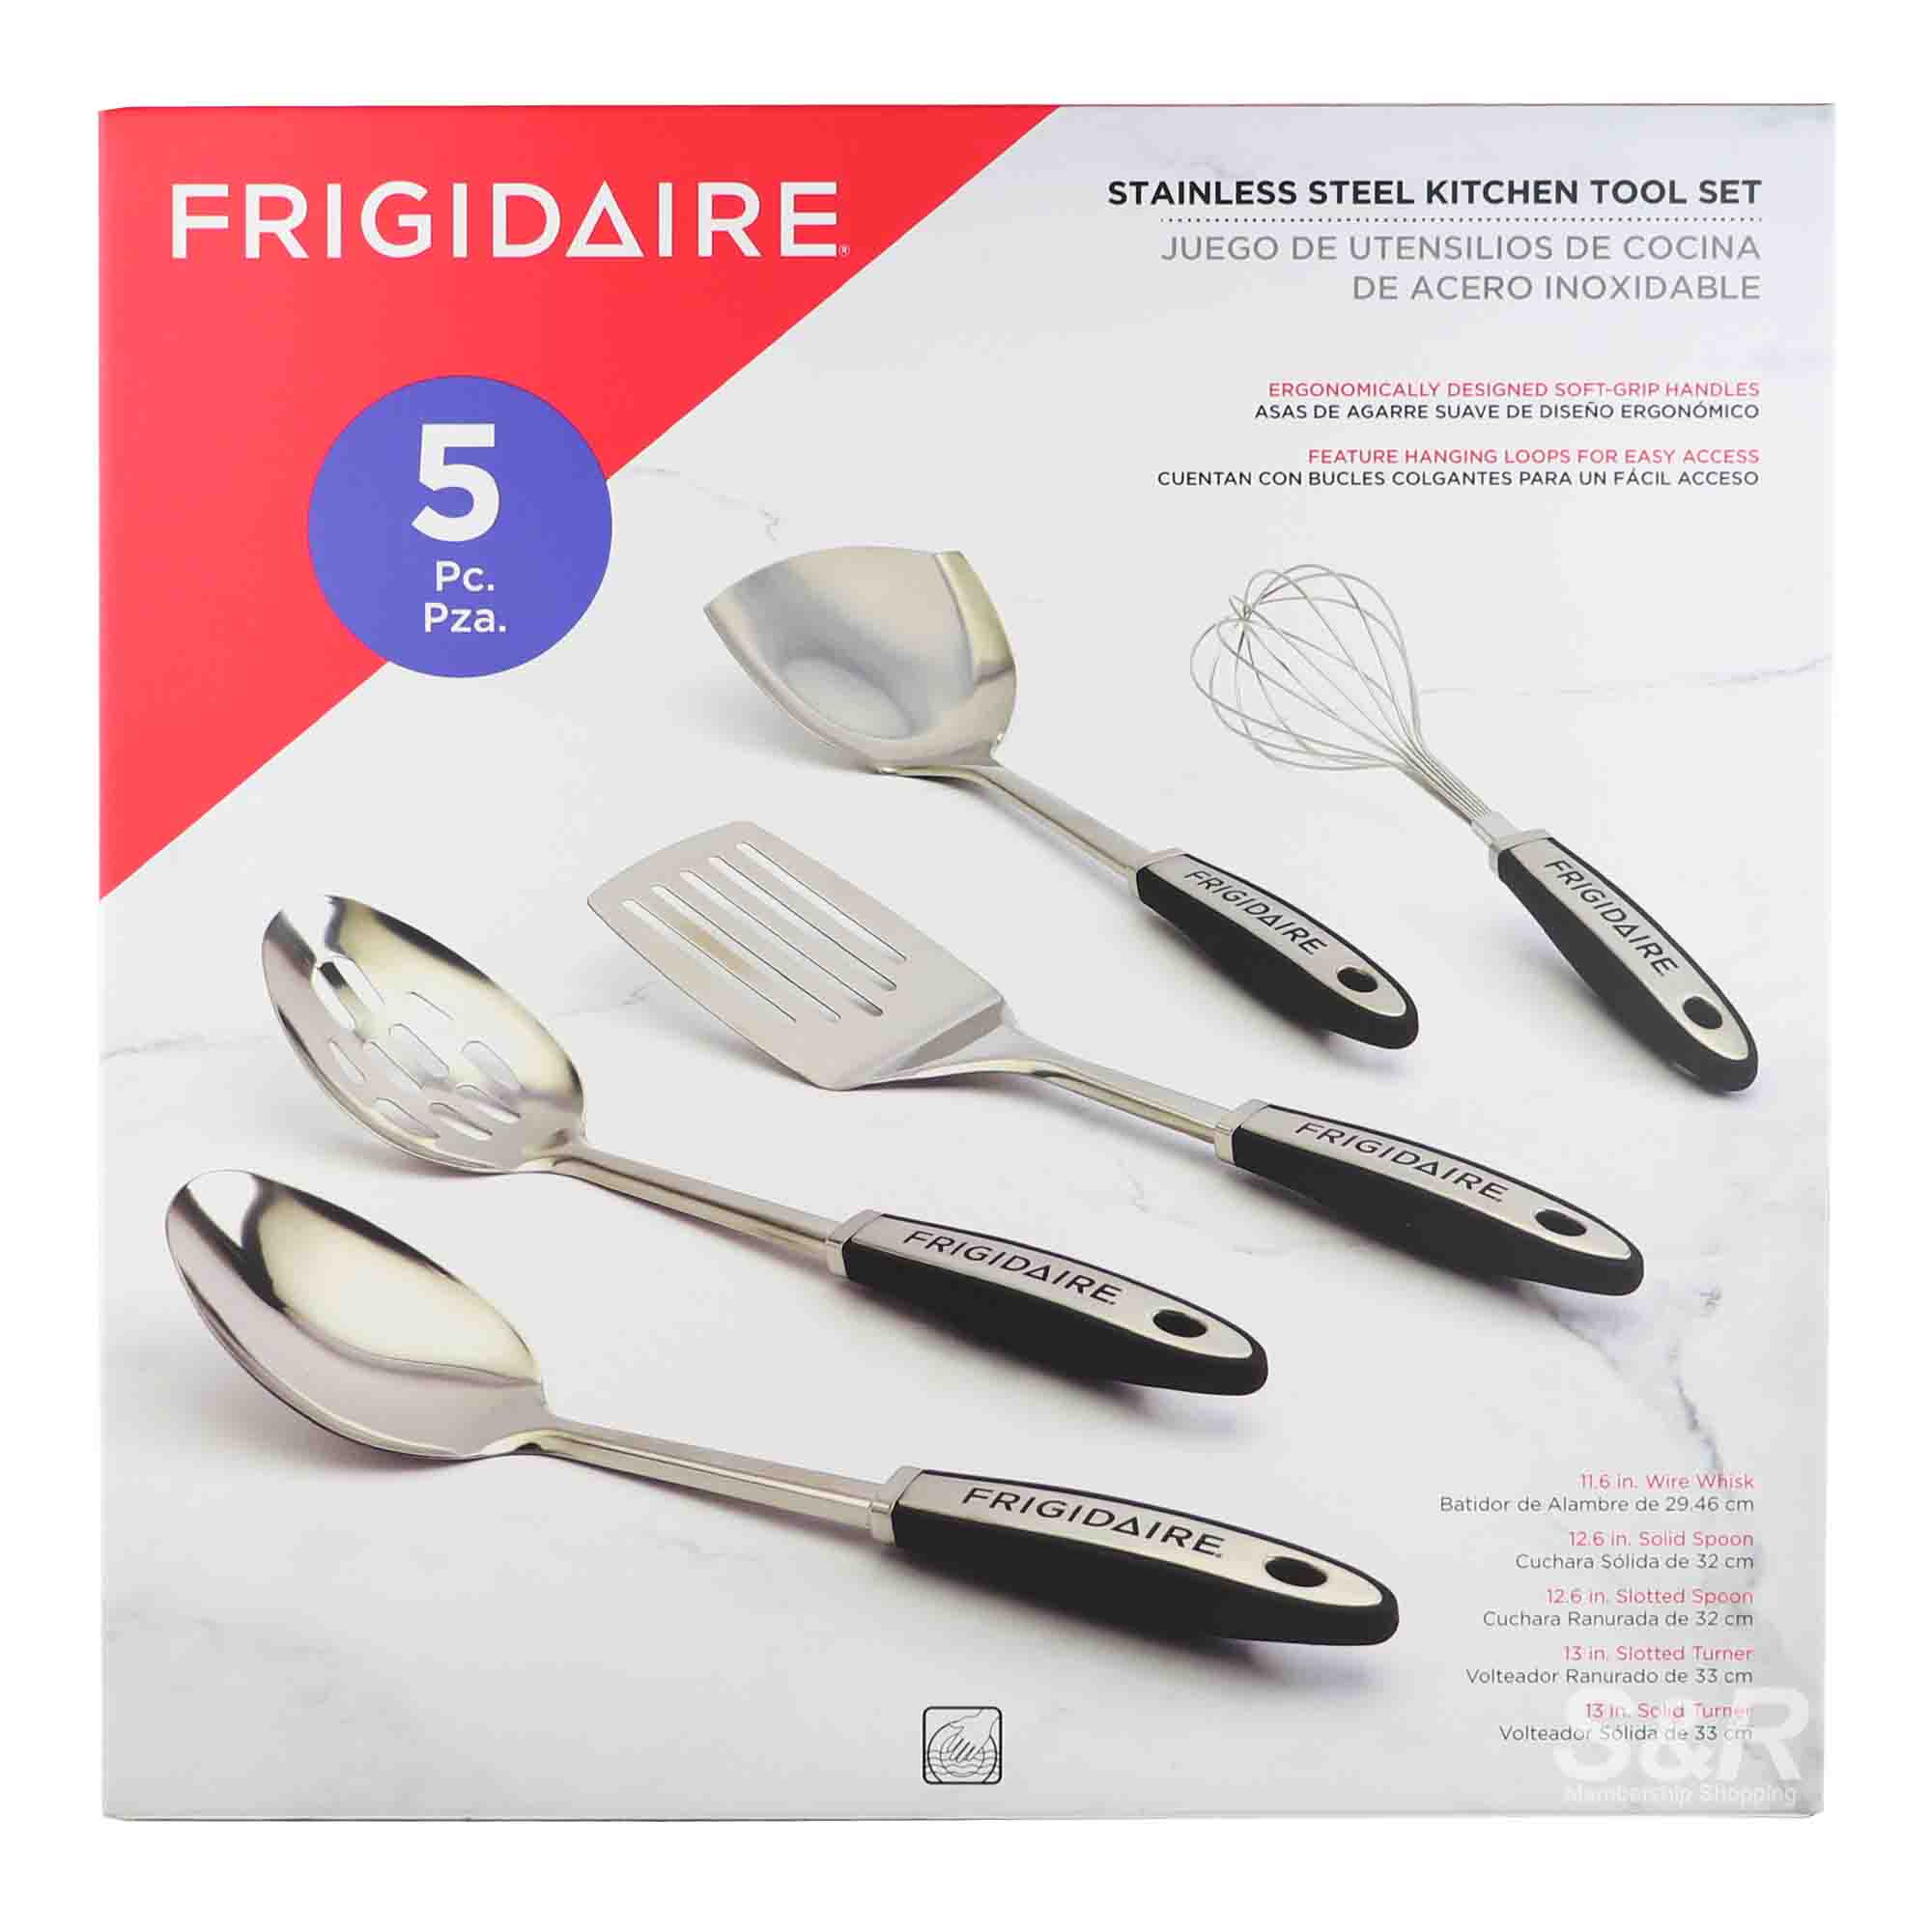 Frigidaire Stainless Steel Kitchen Tool Set 5pcs